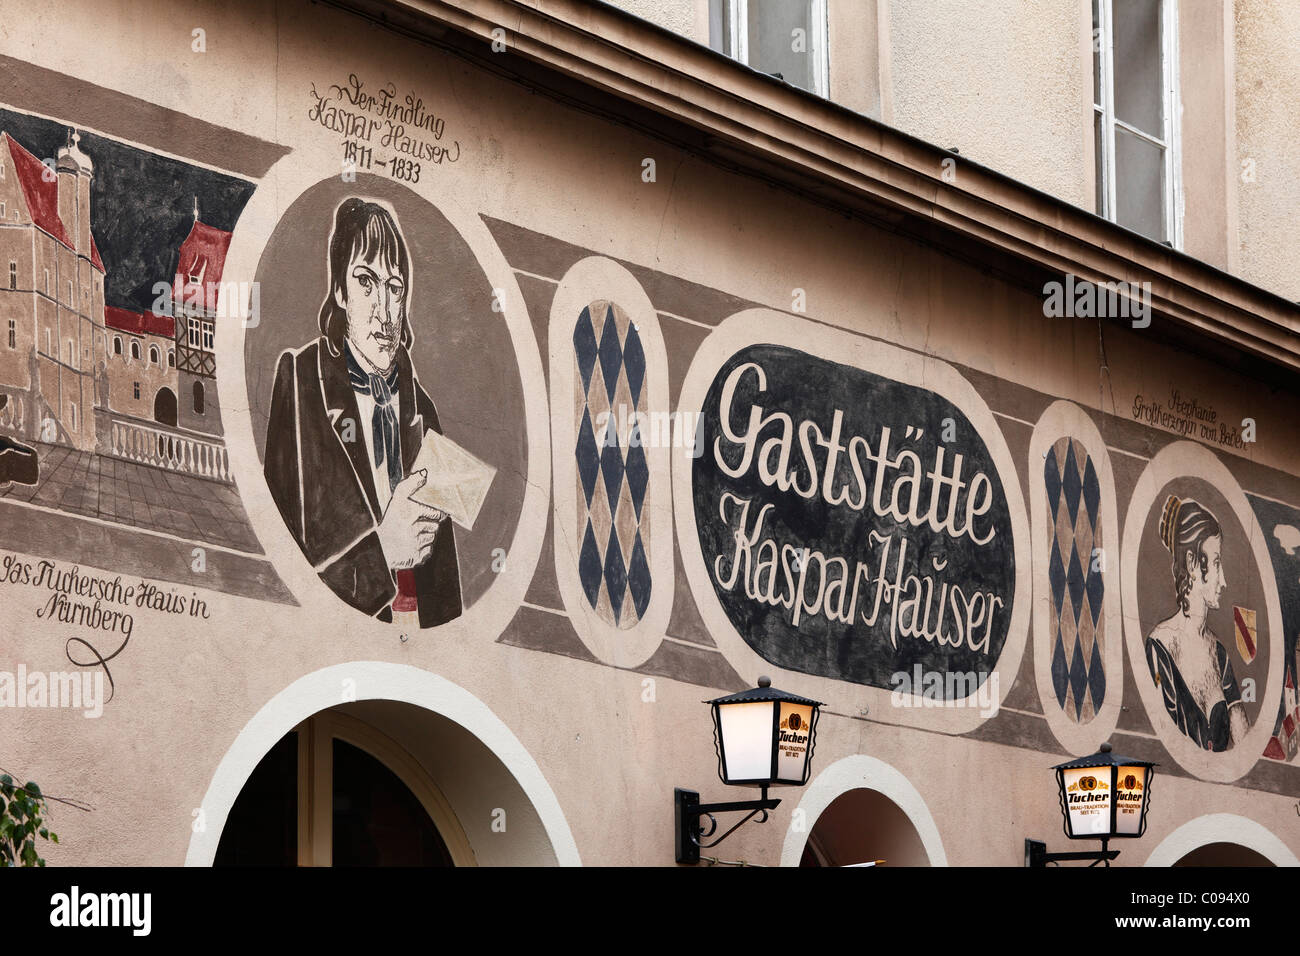 Restaurant Kaspar Hauser, Ansbach, Middle Franconia, Franconia, Bavaria, Germany, Europe Banque D'Images